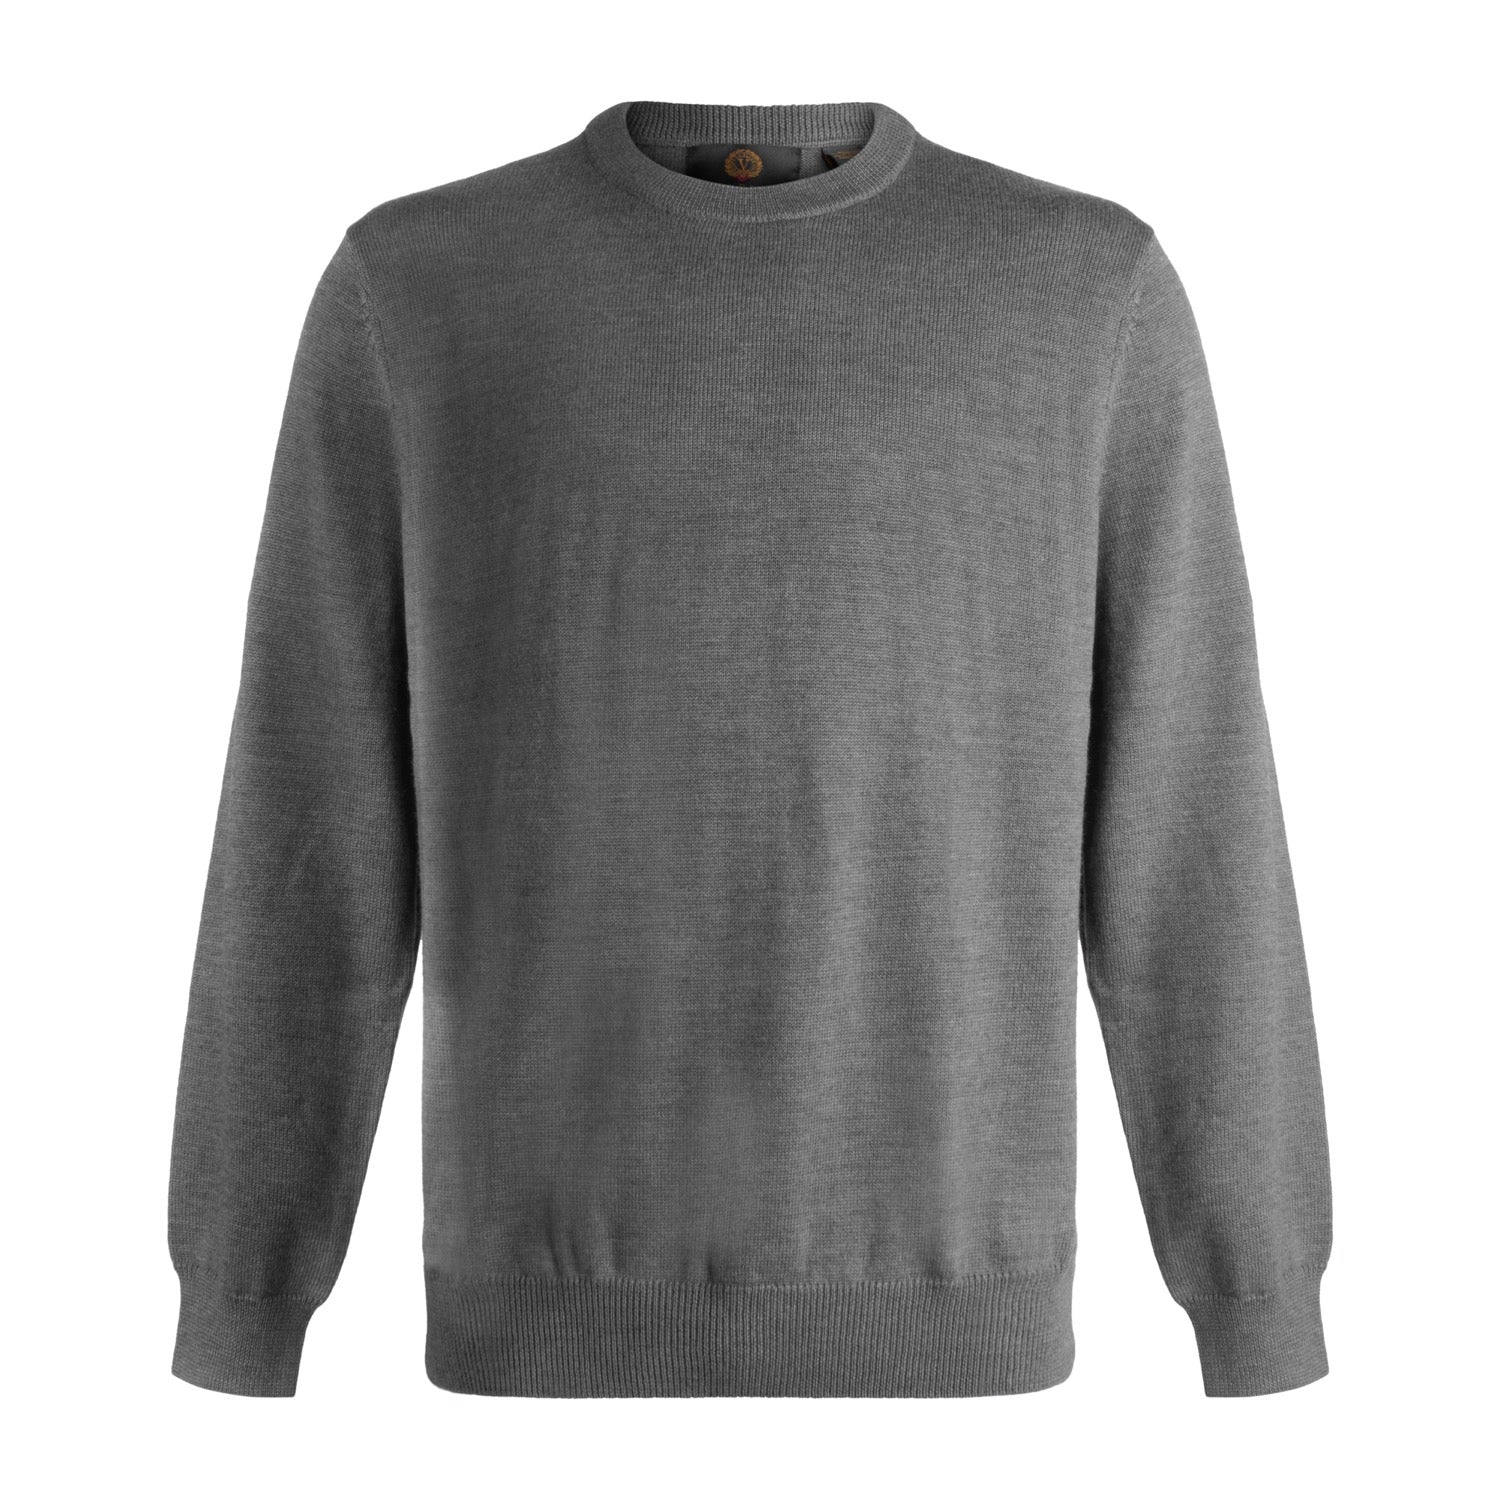 Extra Fine 'Zegna Baruffa' Merino Wool Crew Neck Sweater in Charcoal by Viyella